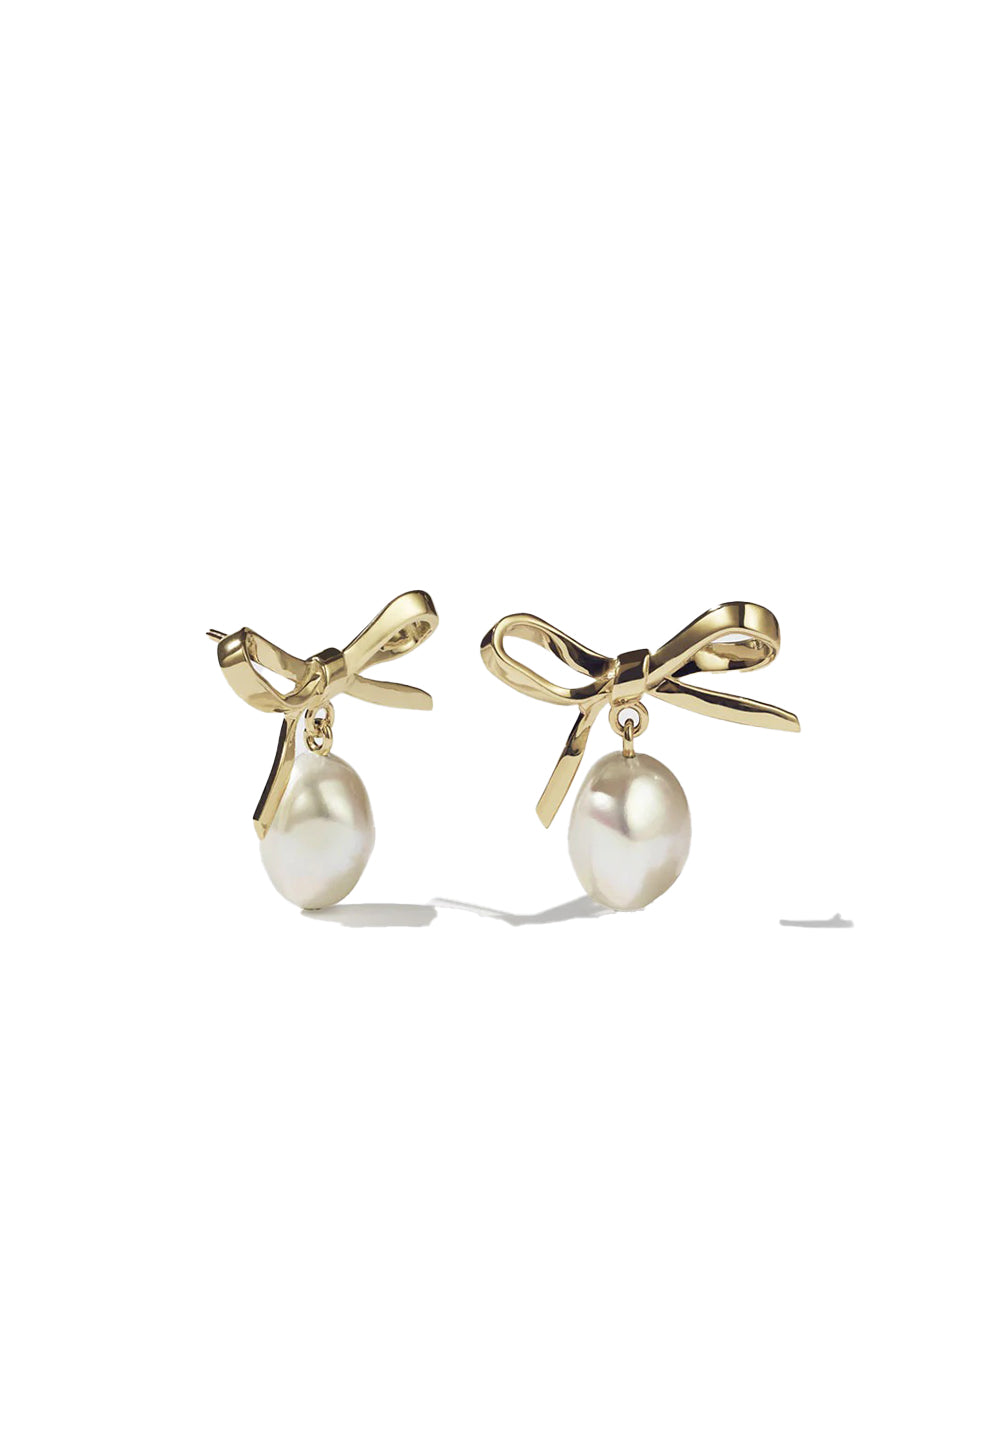 Bow Pearl Stud Earrings sold by Angel Divine